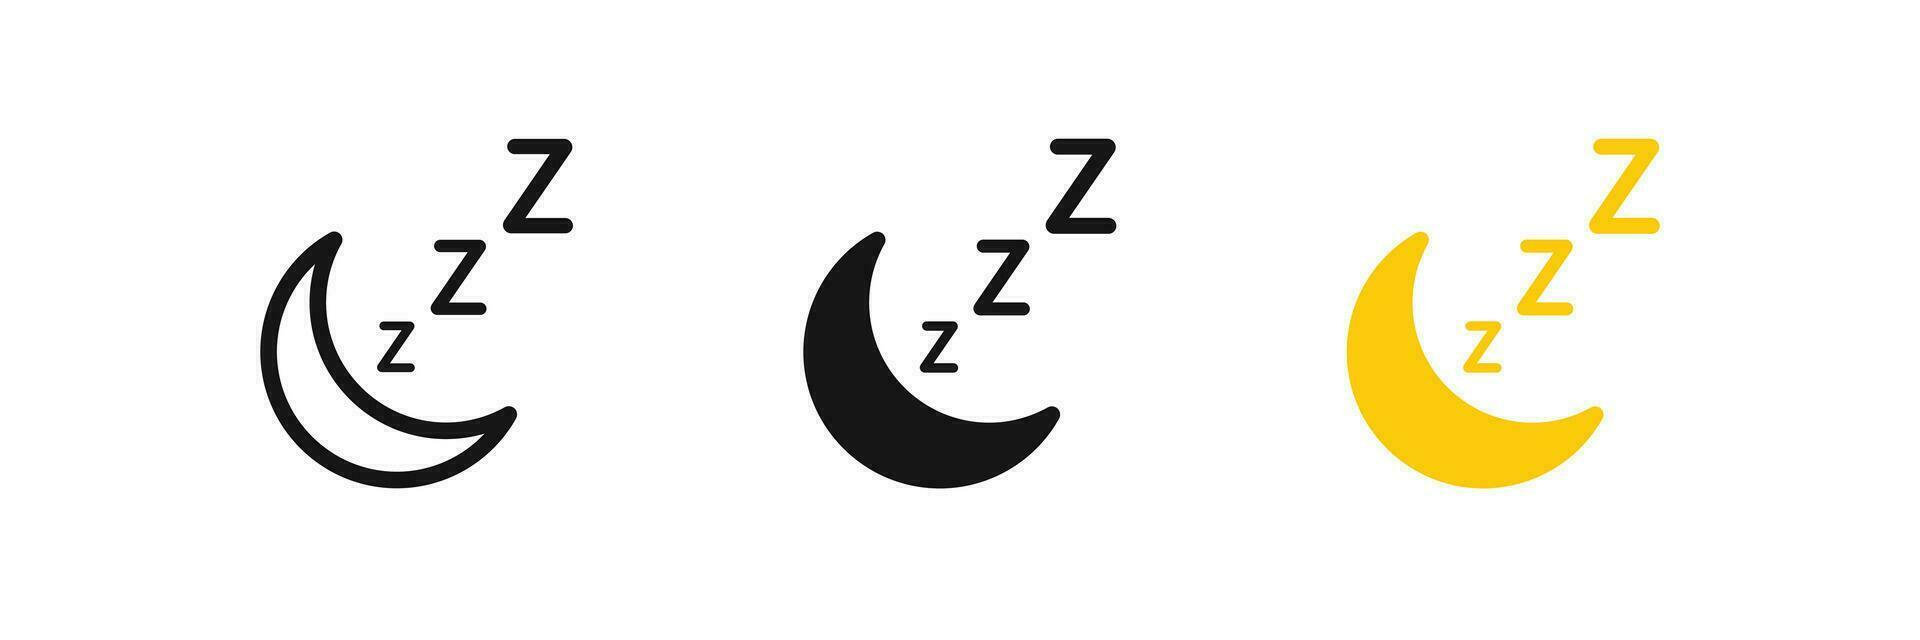 lua dormir ícone. descansar zzz símbolo. noite sinais. hora de dormir símbolos. Sonhe conceito ícones. preto, amarelo cor. vetor isolado placa.